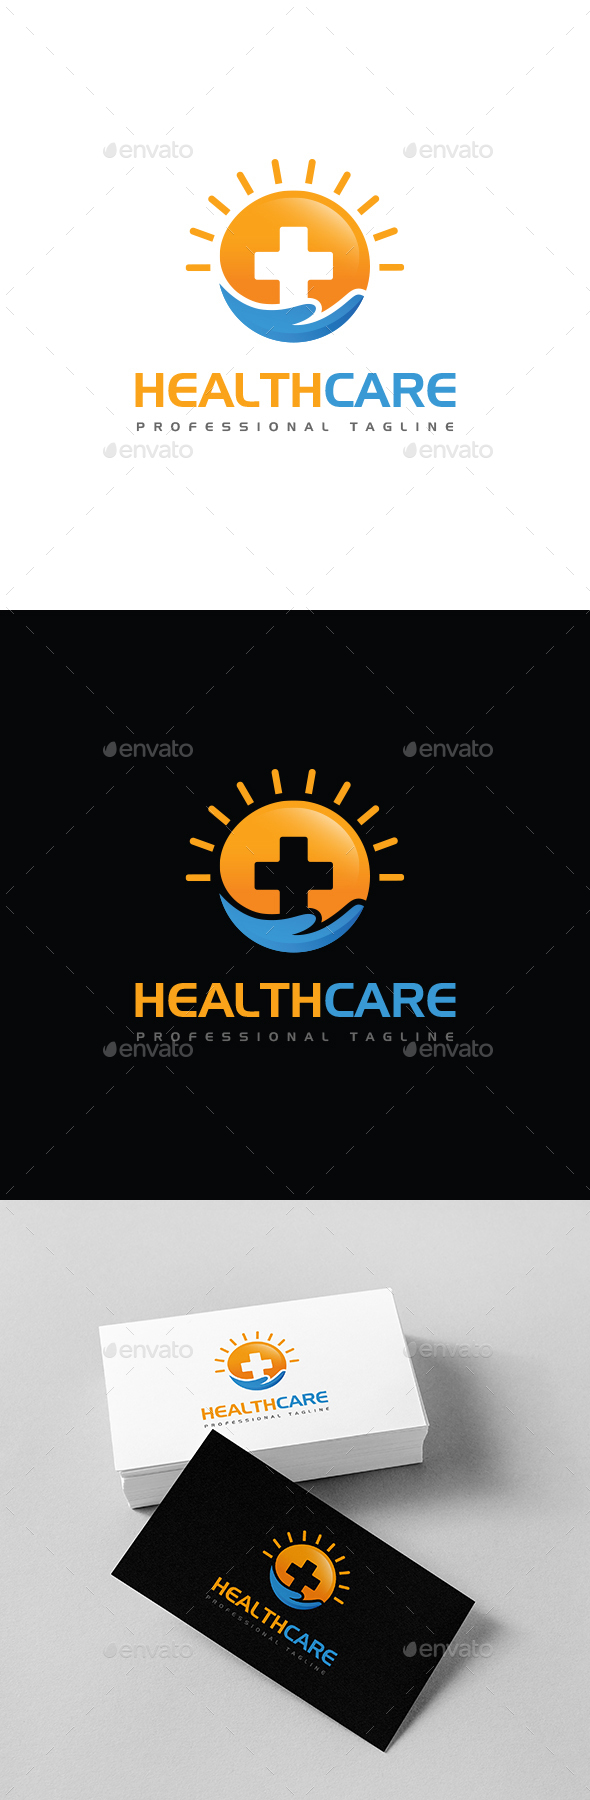 Health care logo